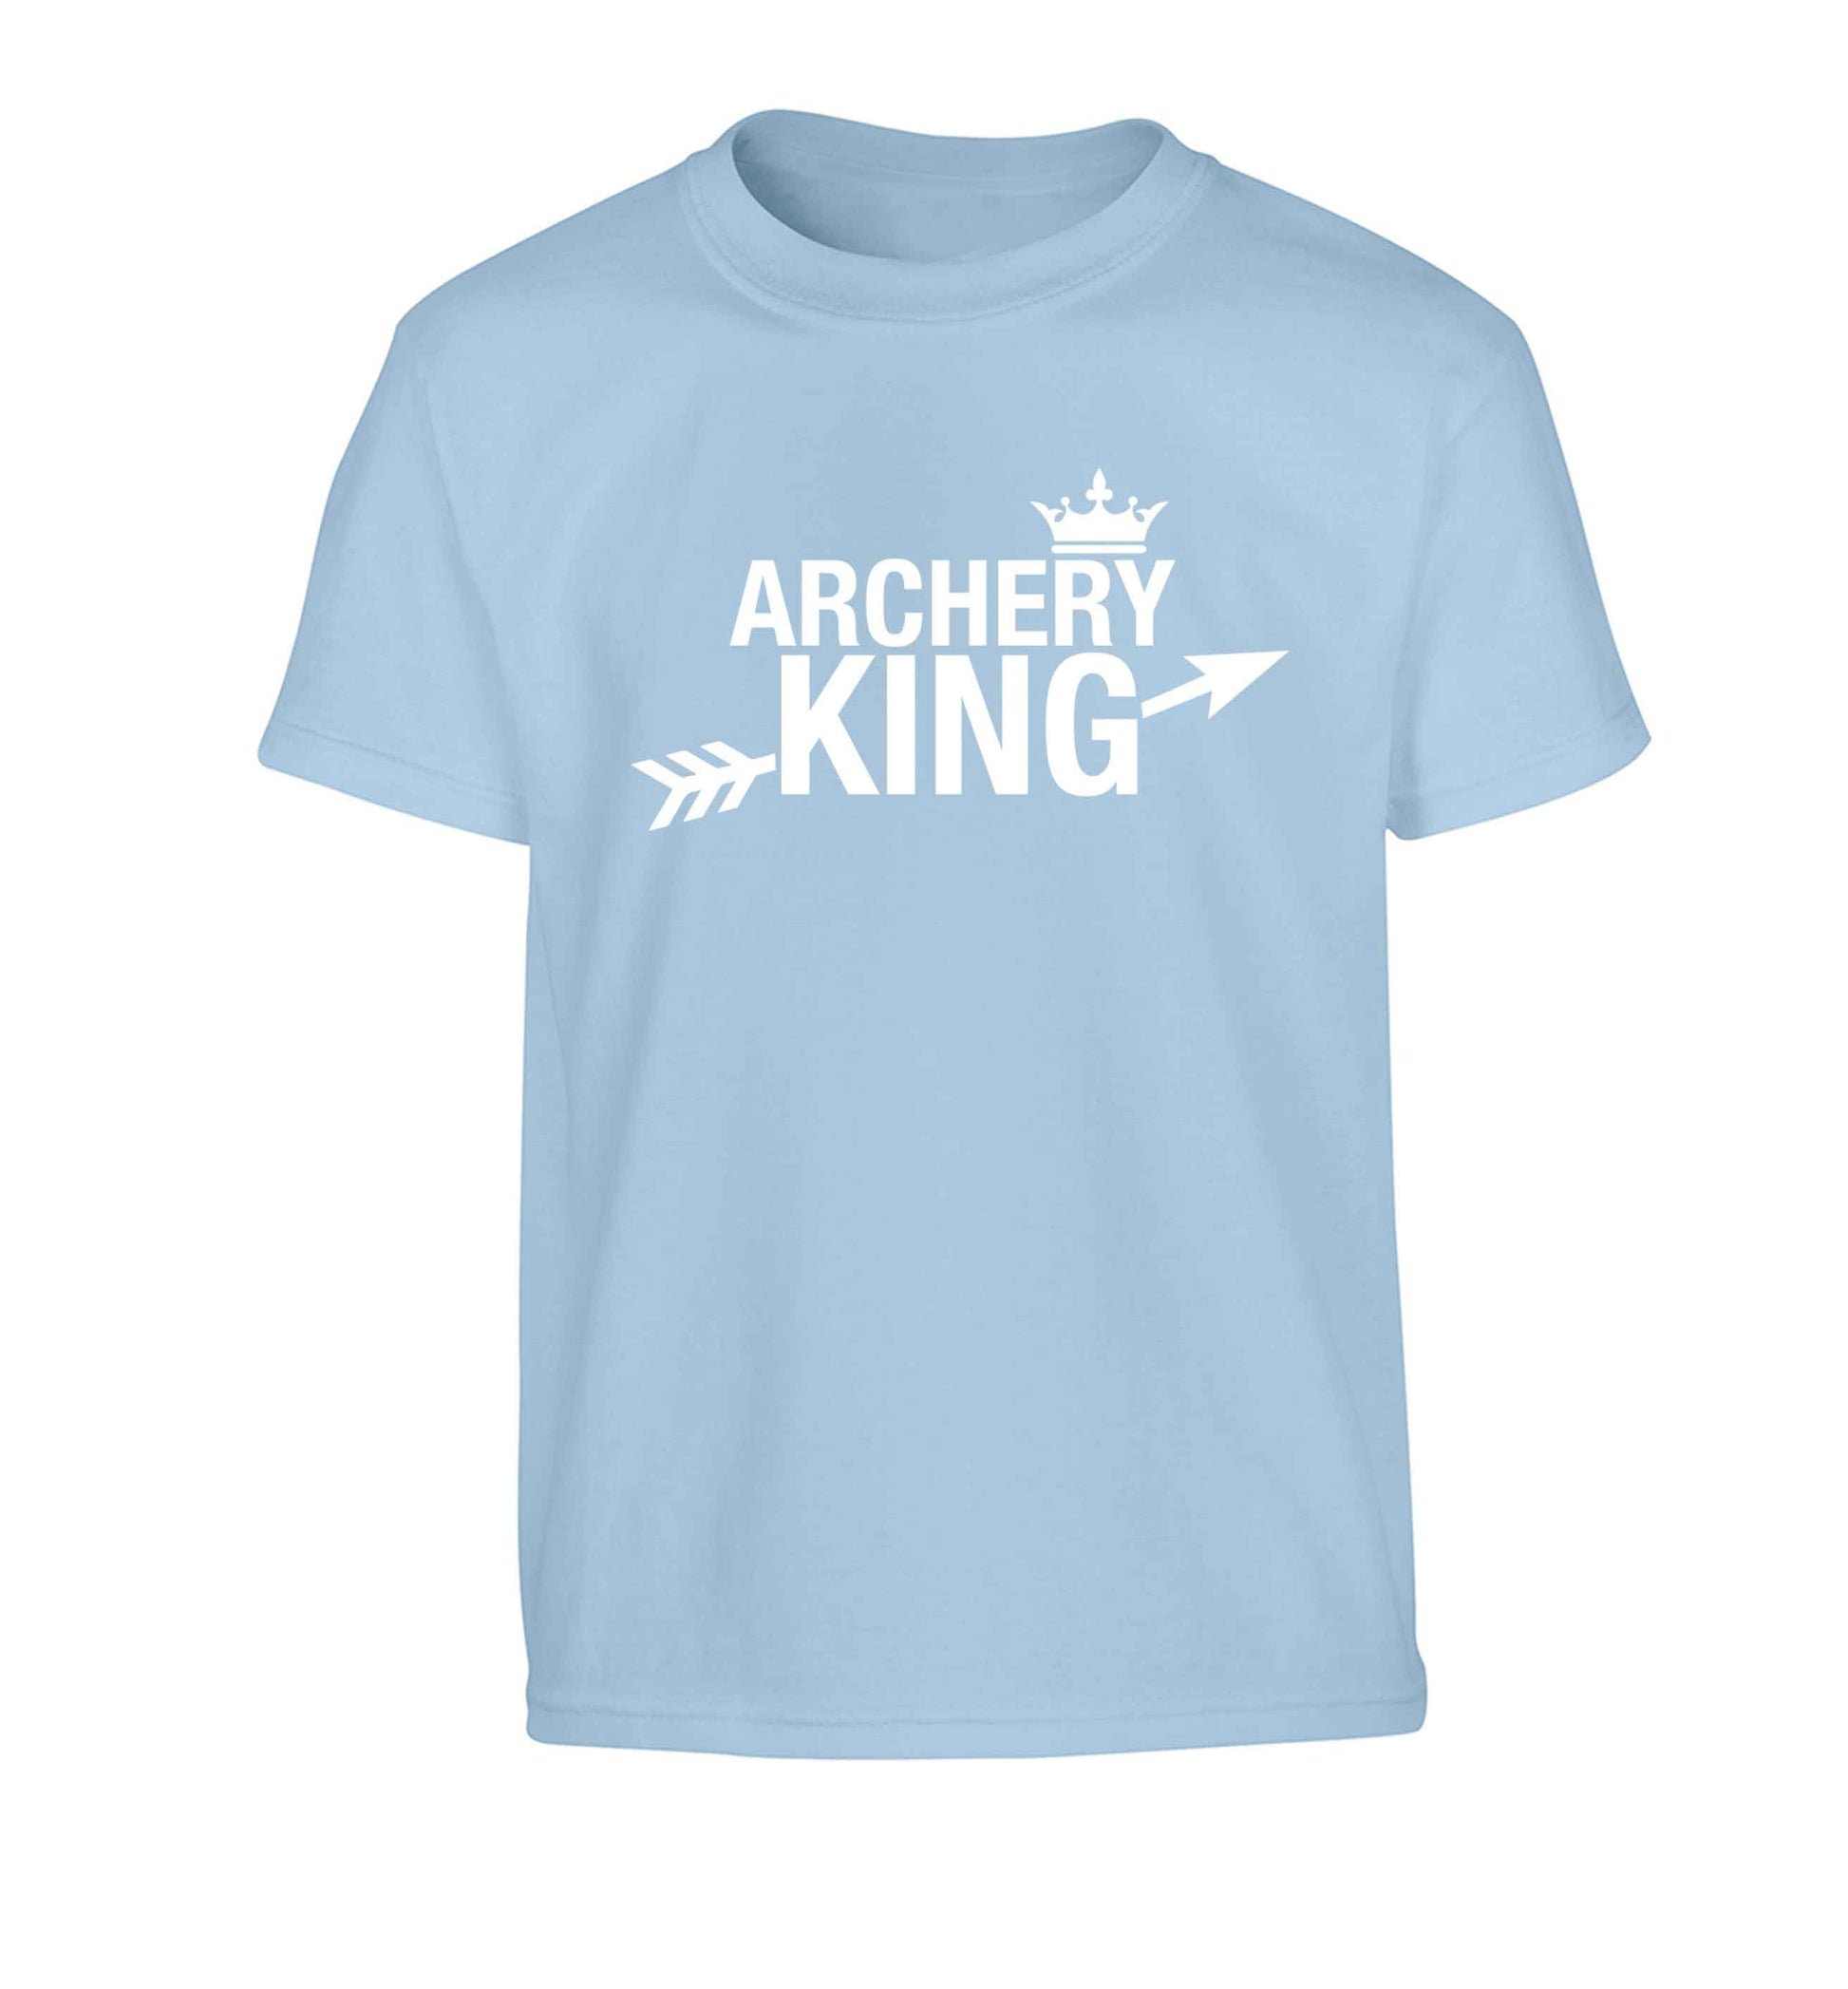 Archery king Children's light blue Tshirt 12-13 Years